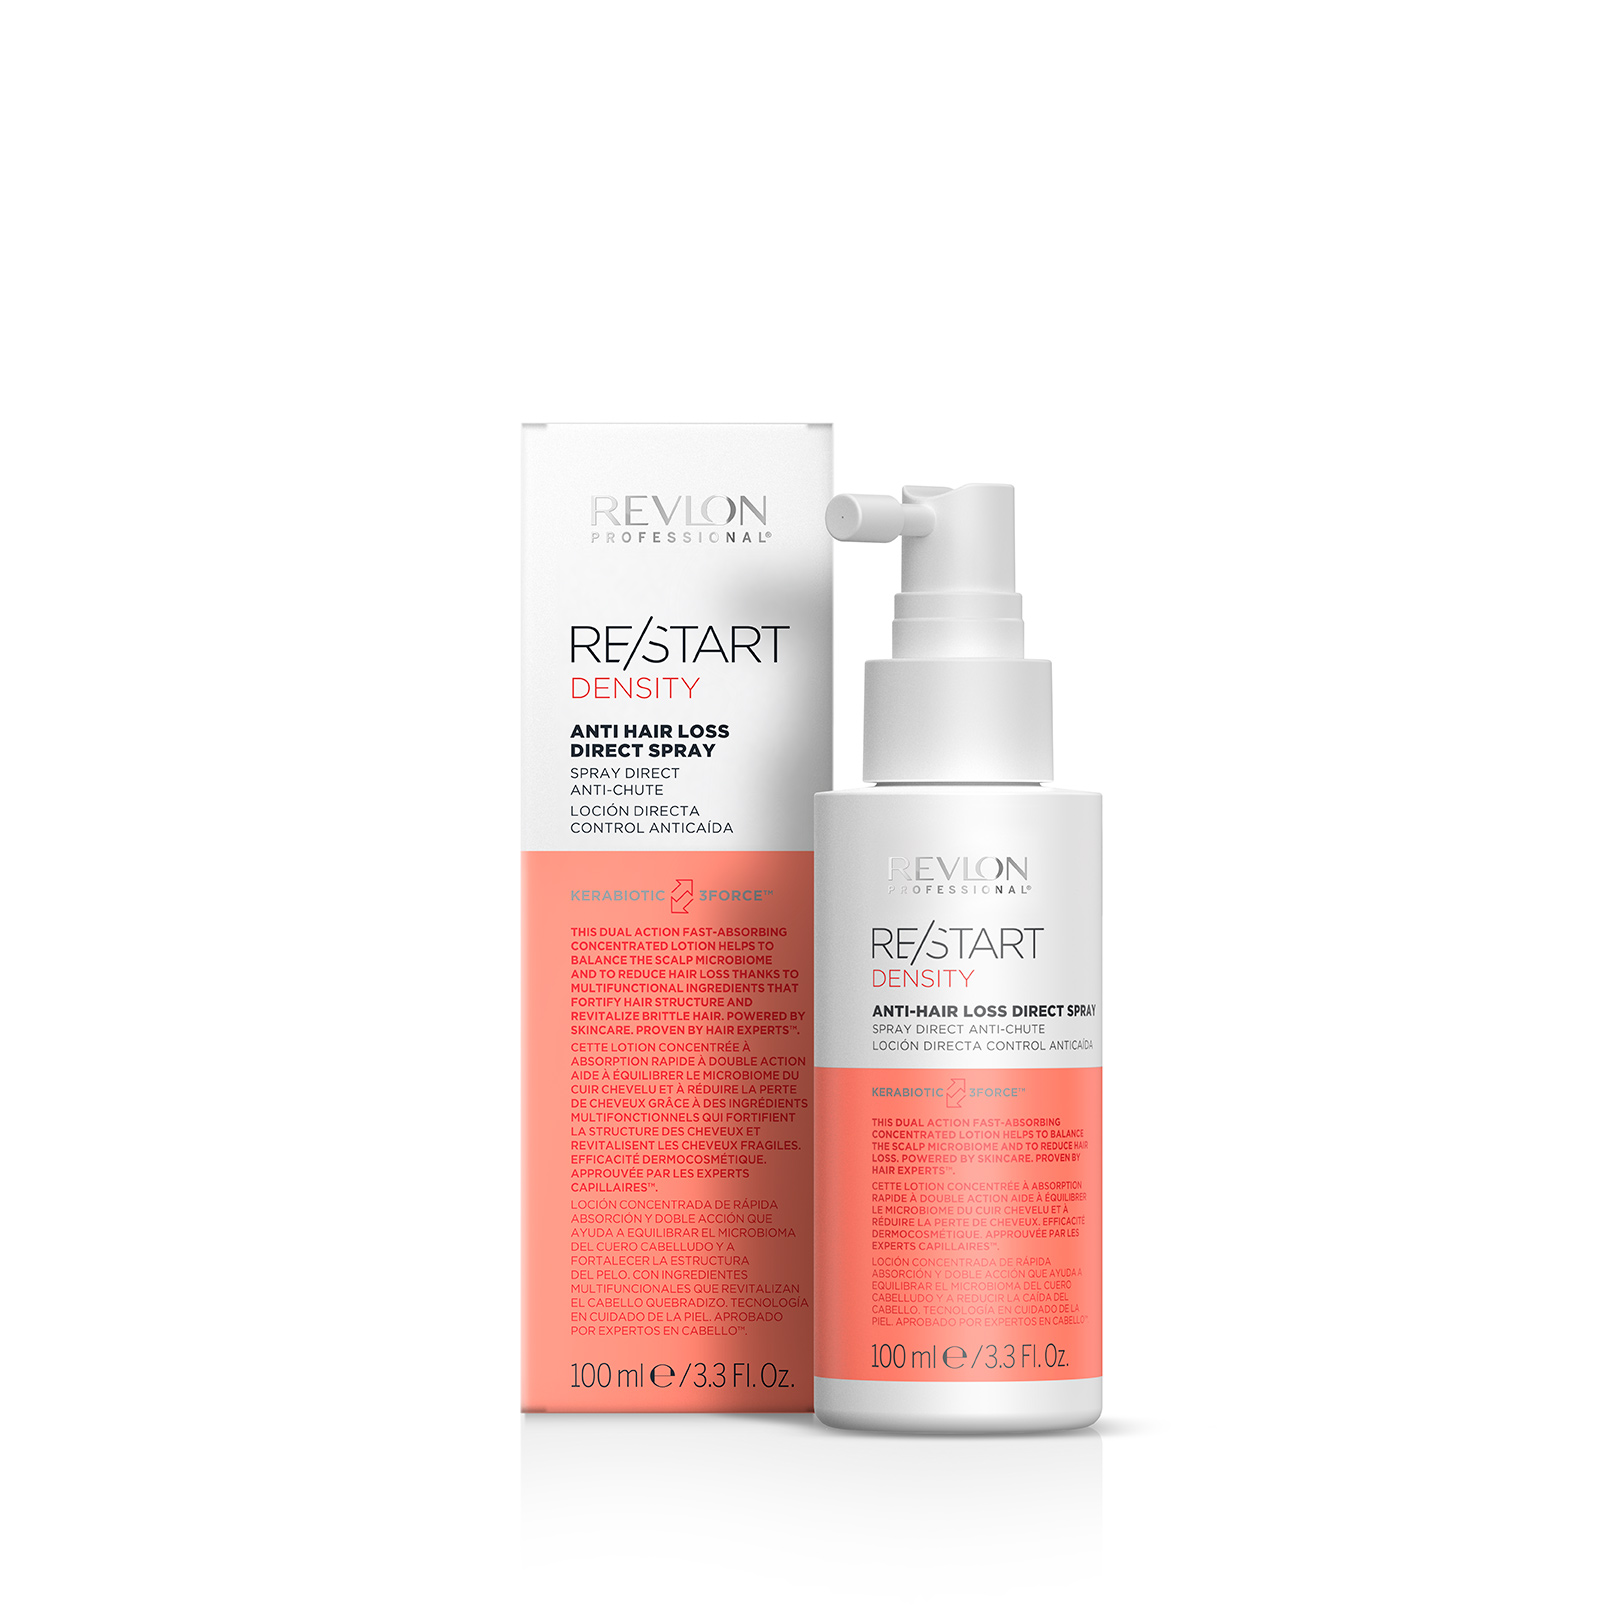 Revlon RE/START™ Anti-Hair Density - Loss Professional Direct Spray